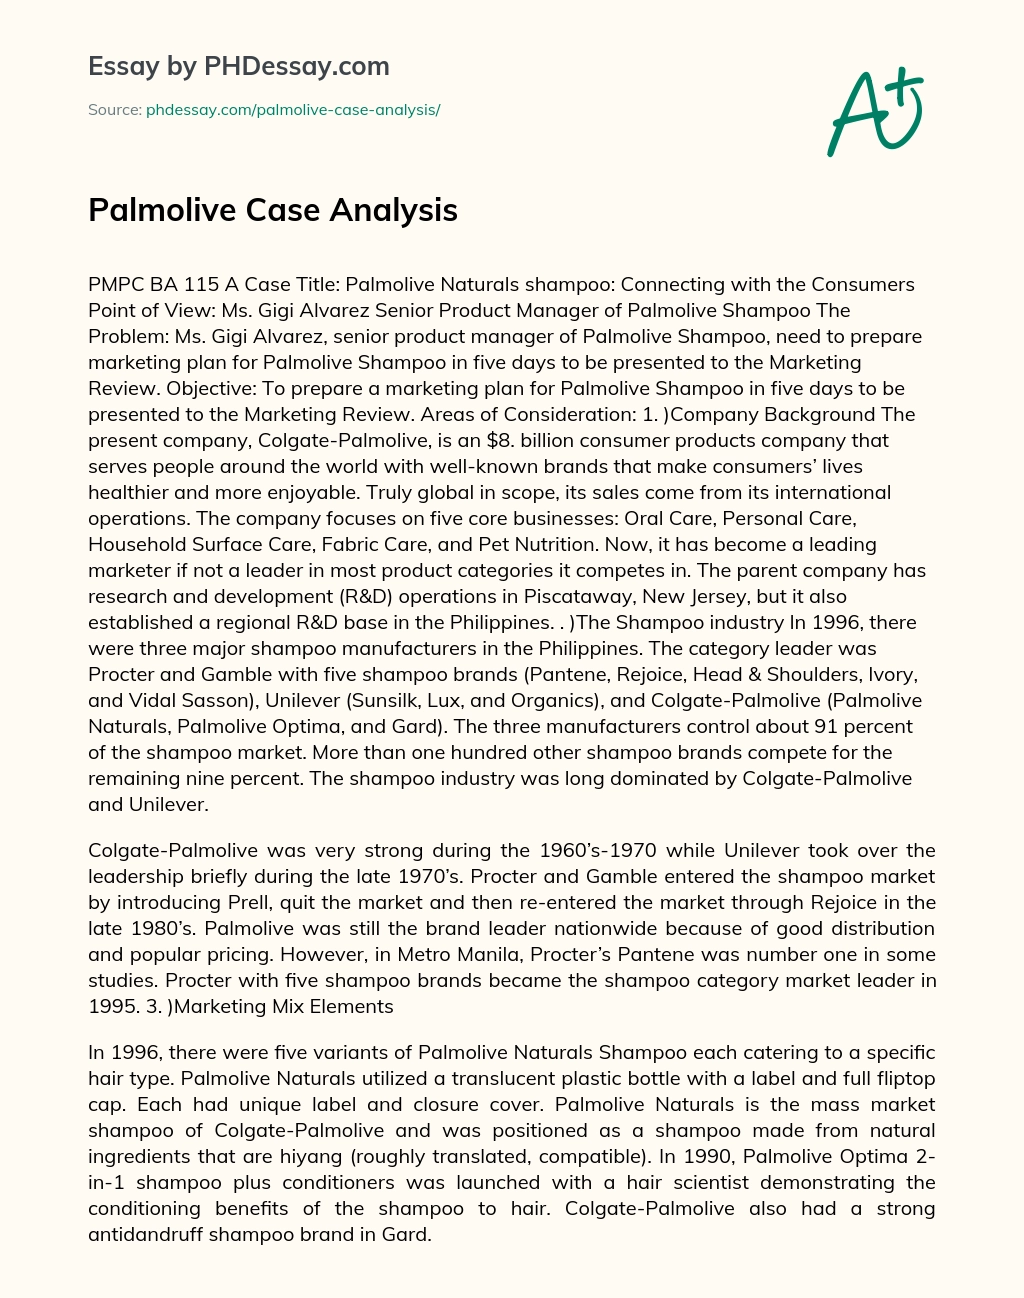 Palmolive Case Analysis essay